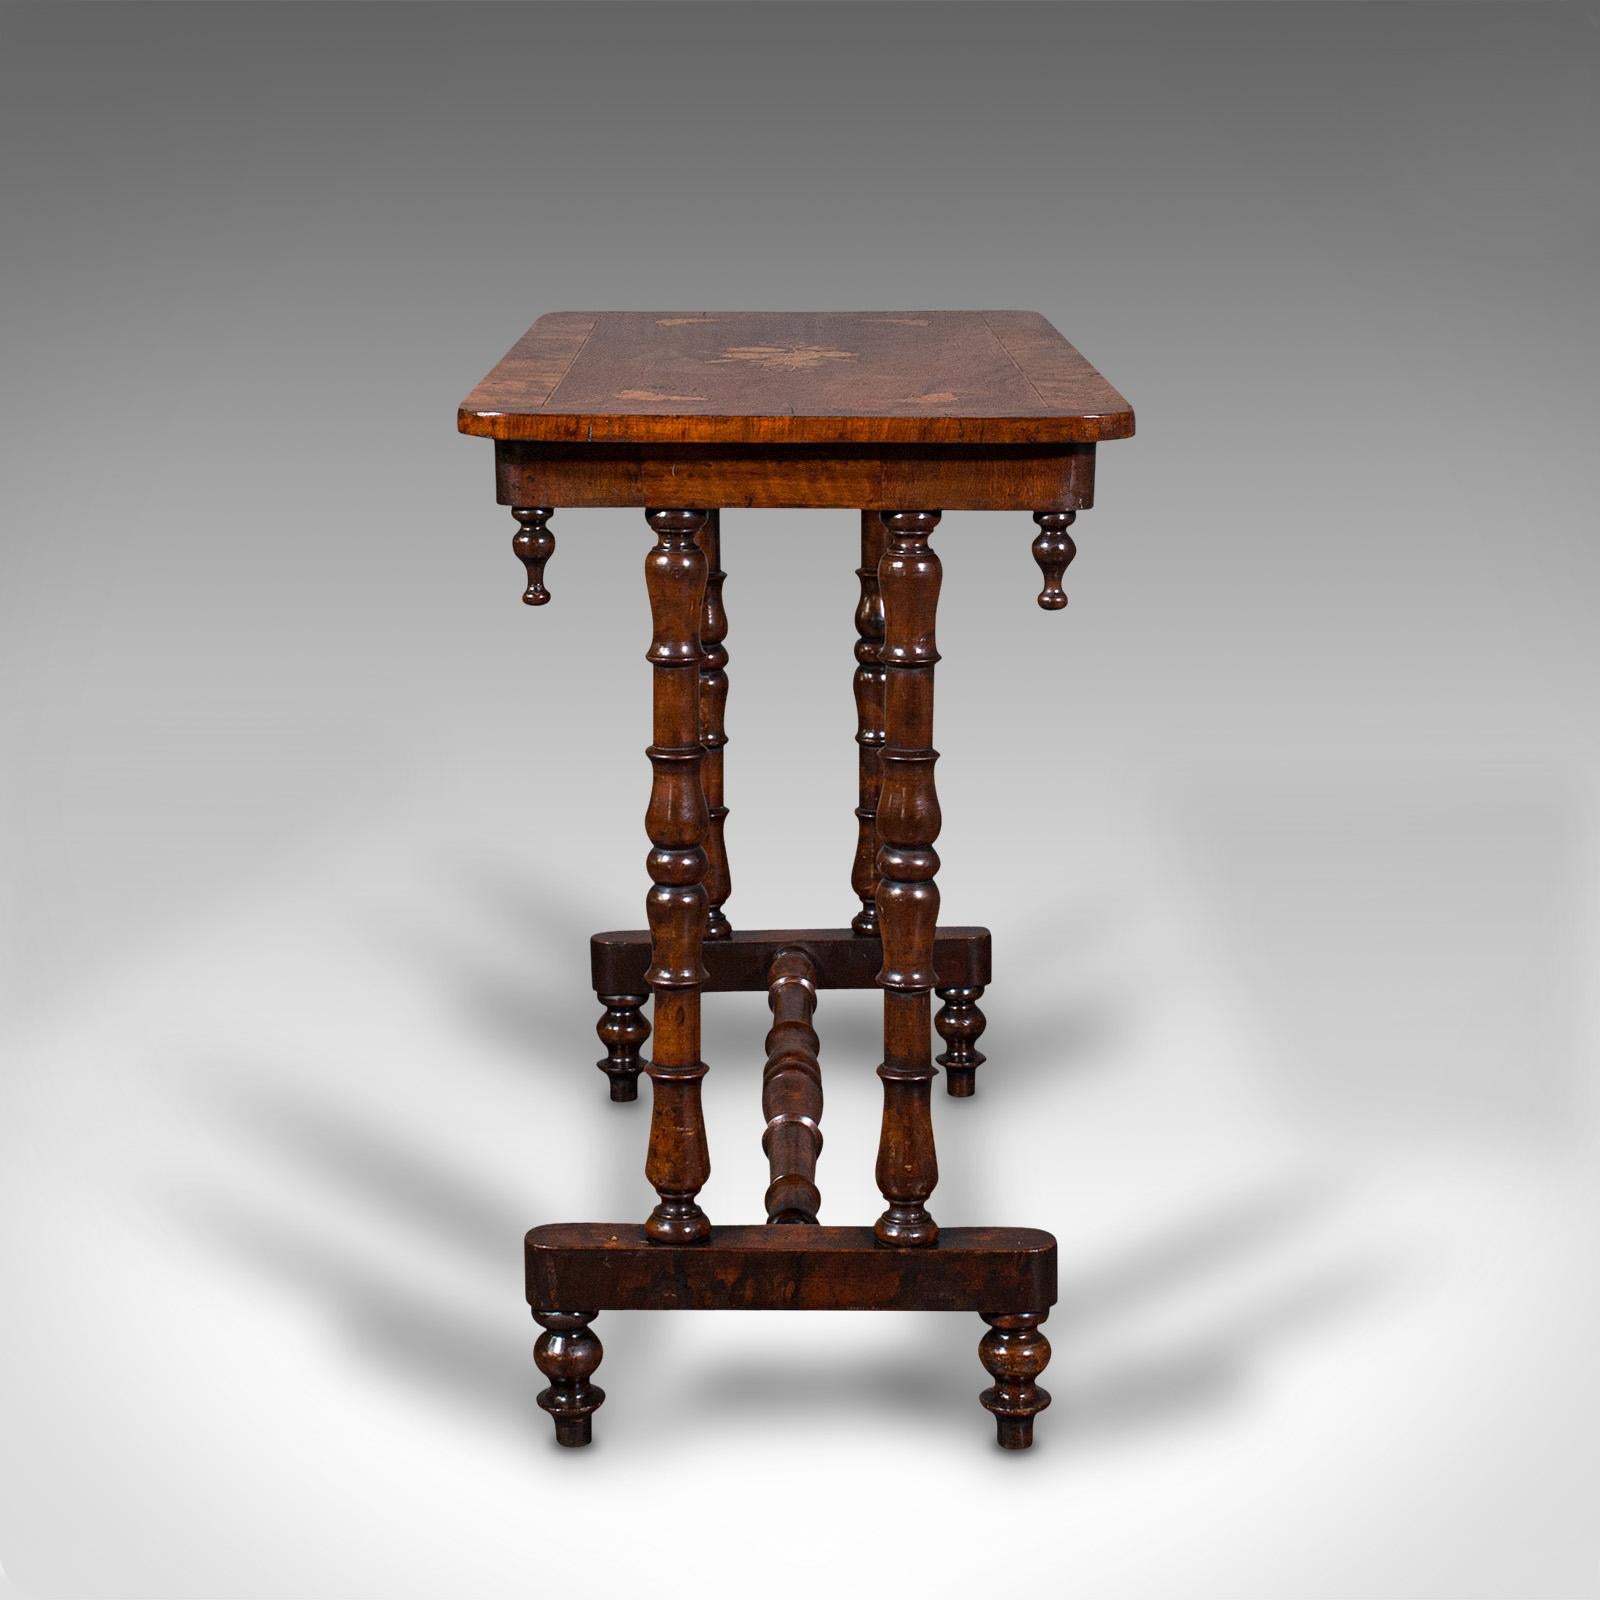 British Antique Console Table, English, Walnut, Decorative, Side, Occasional, Regency